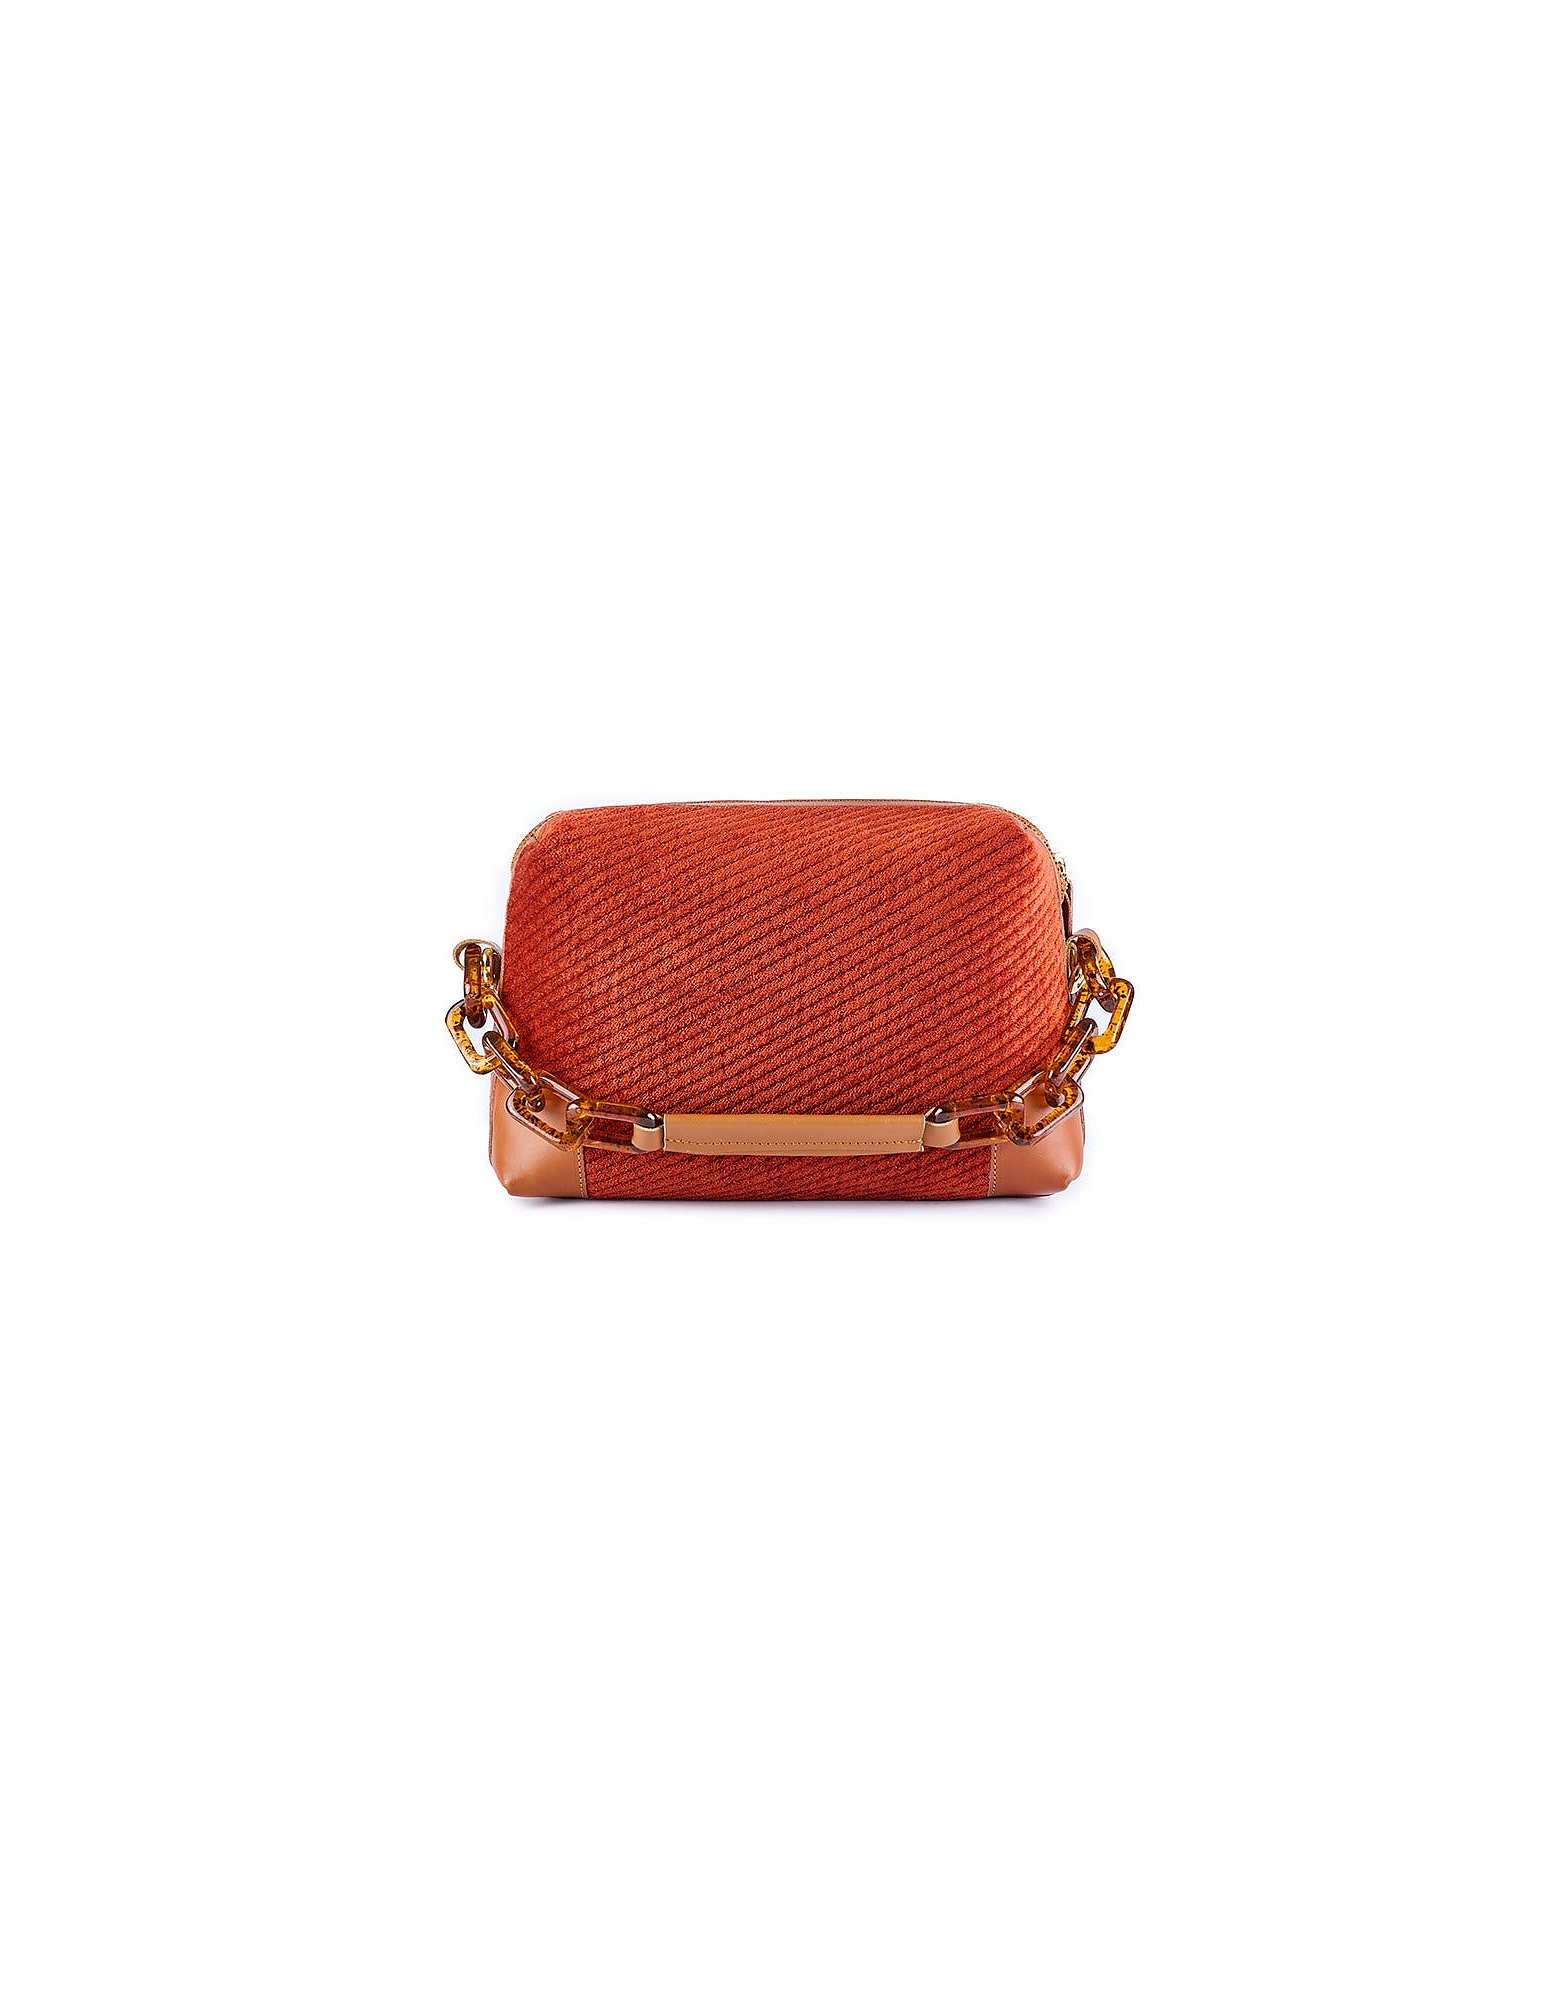 Viamailbag Designer Handbags Stresa Stone - Crossbody Bag In Orange